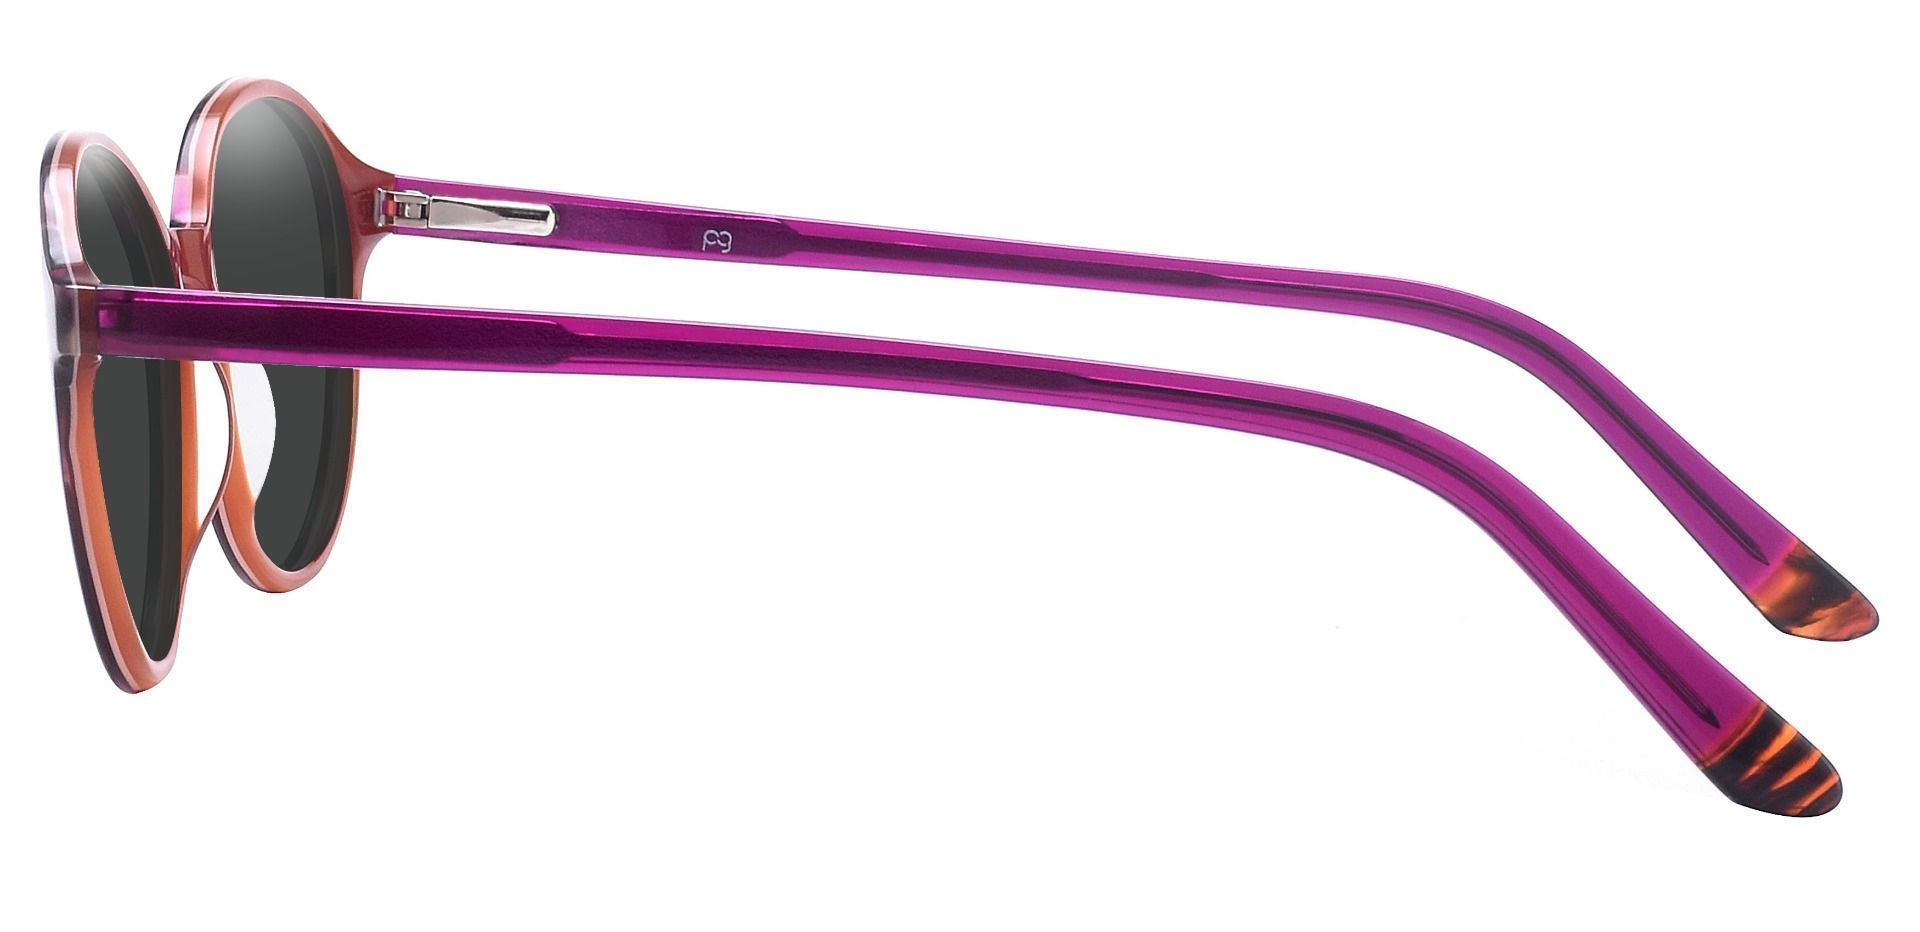 Bellamy Oval Non-Rx Sunglasses - Purple Frame With Gray Lenses